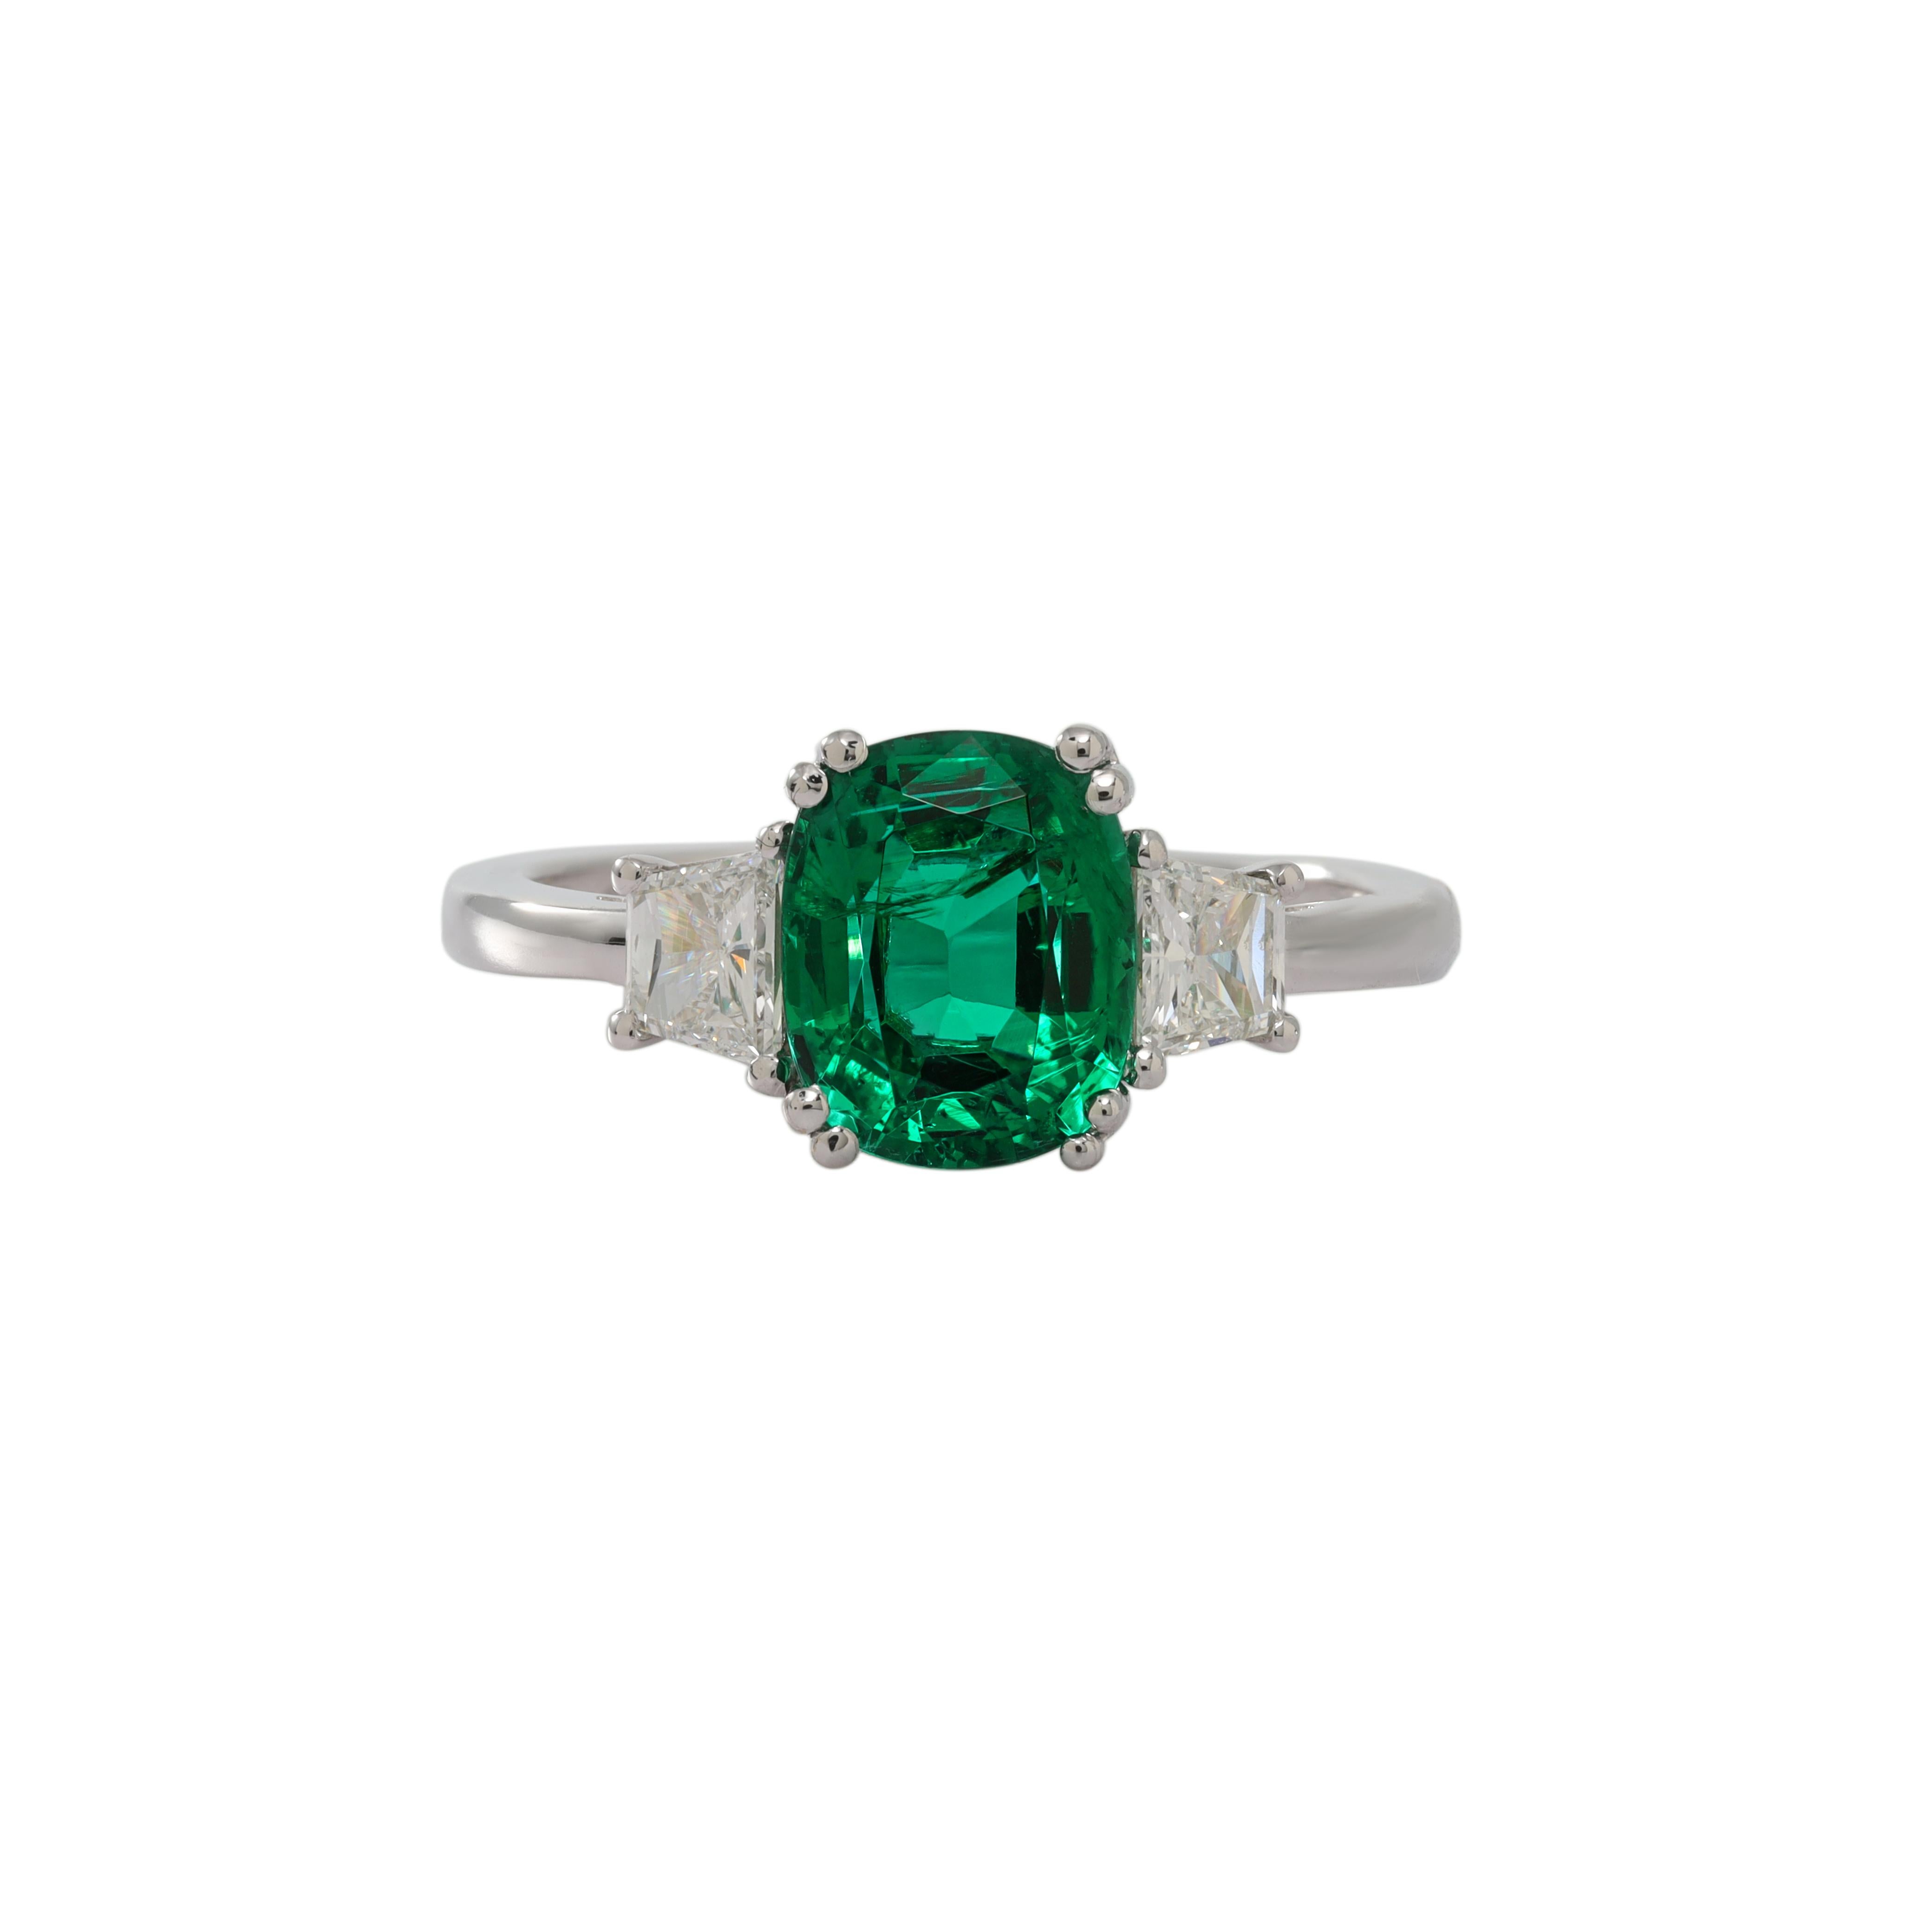 18k wg emerald  ring, tr. Diamond 0.57ct, emerald 2.05ct, 2.64gr
